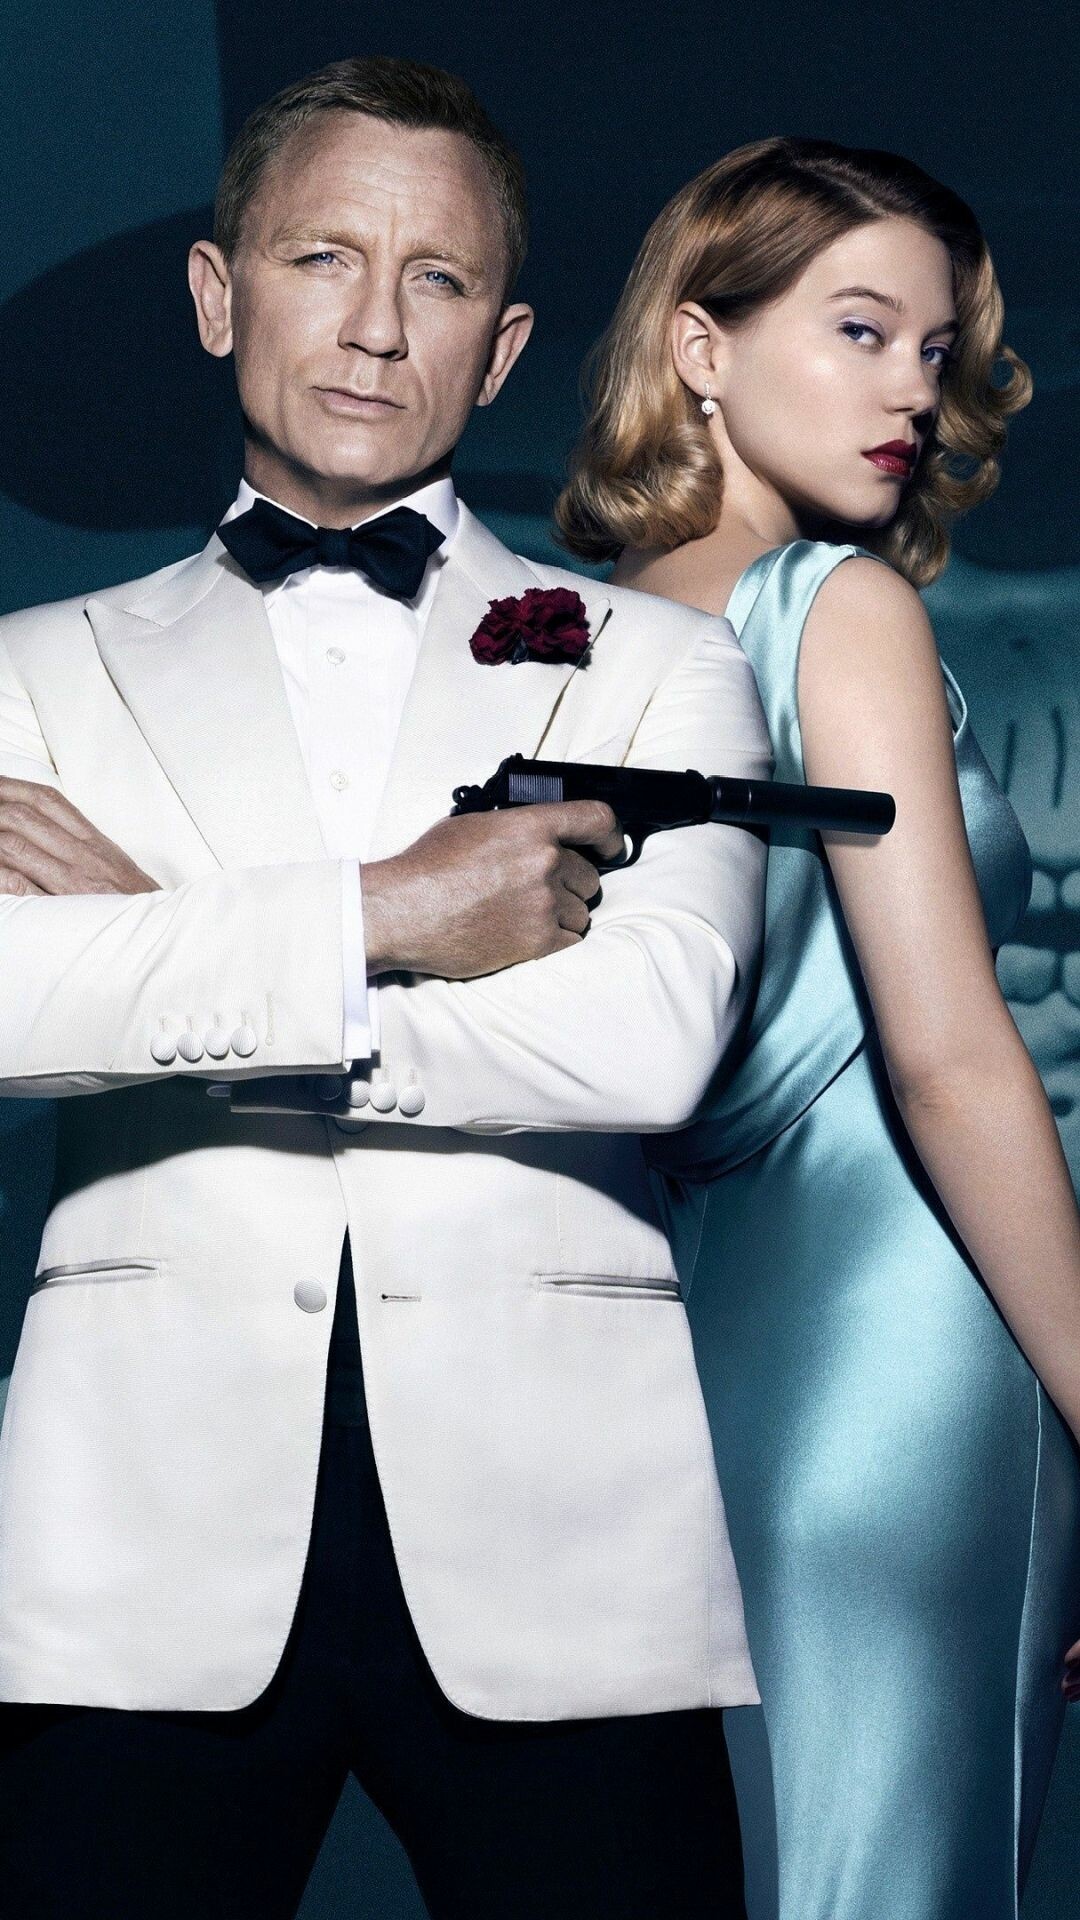 James Bond: Spectre, Stars Daniel Craig as 007 alongside Lea Seydoux. 1080x1920 Full HD Background.